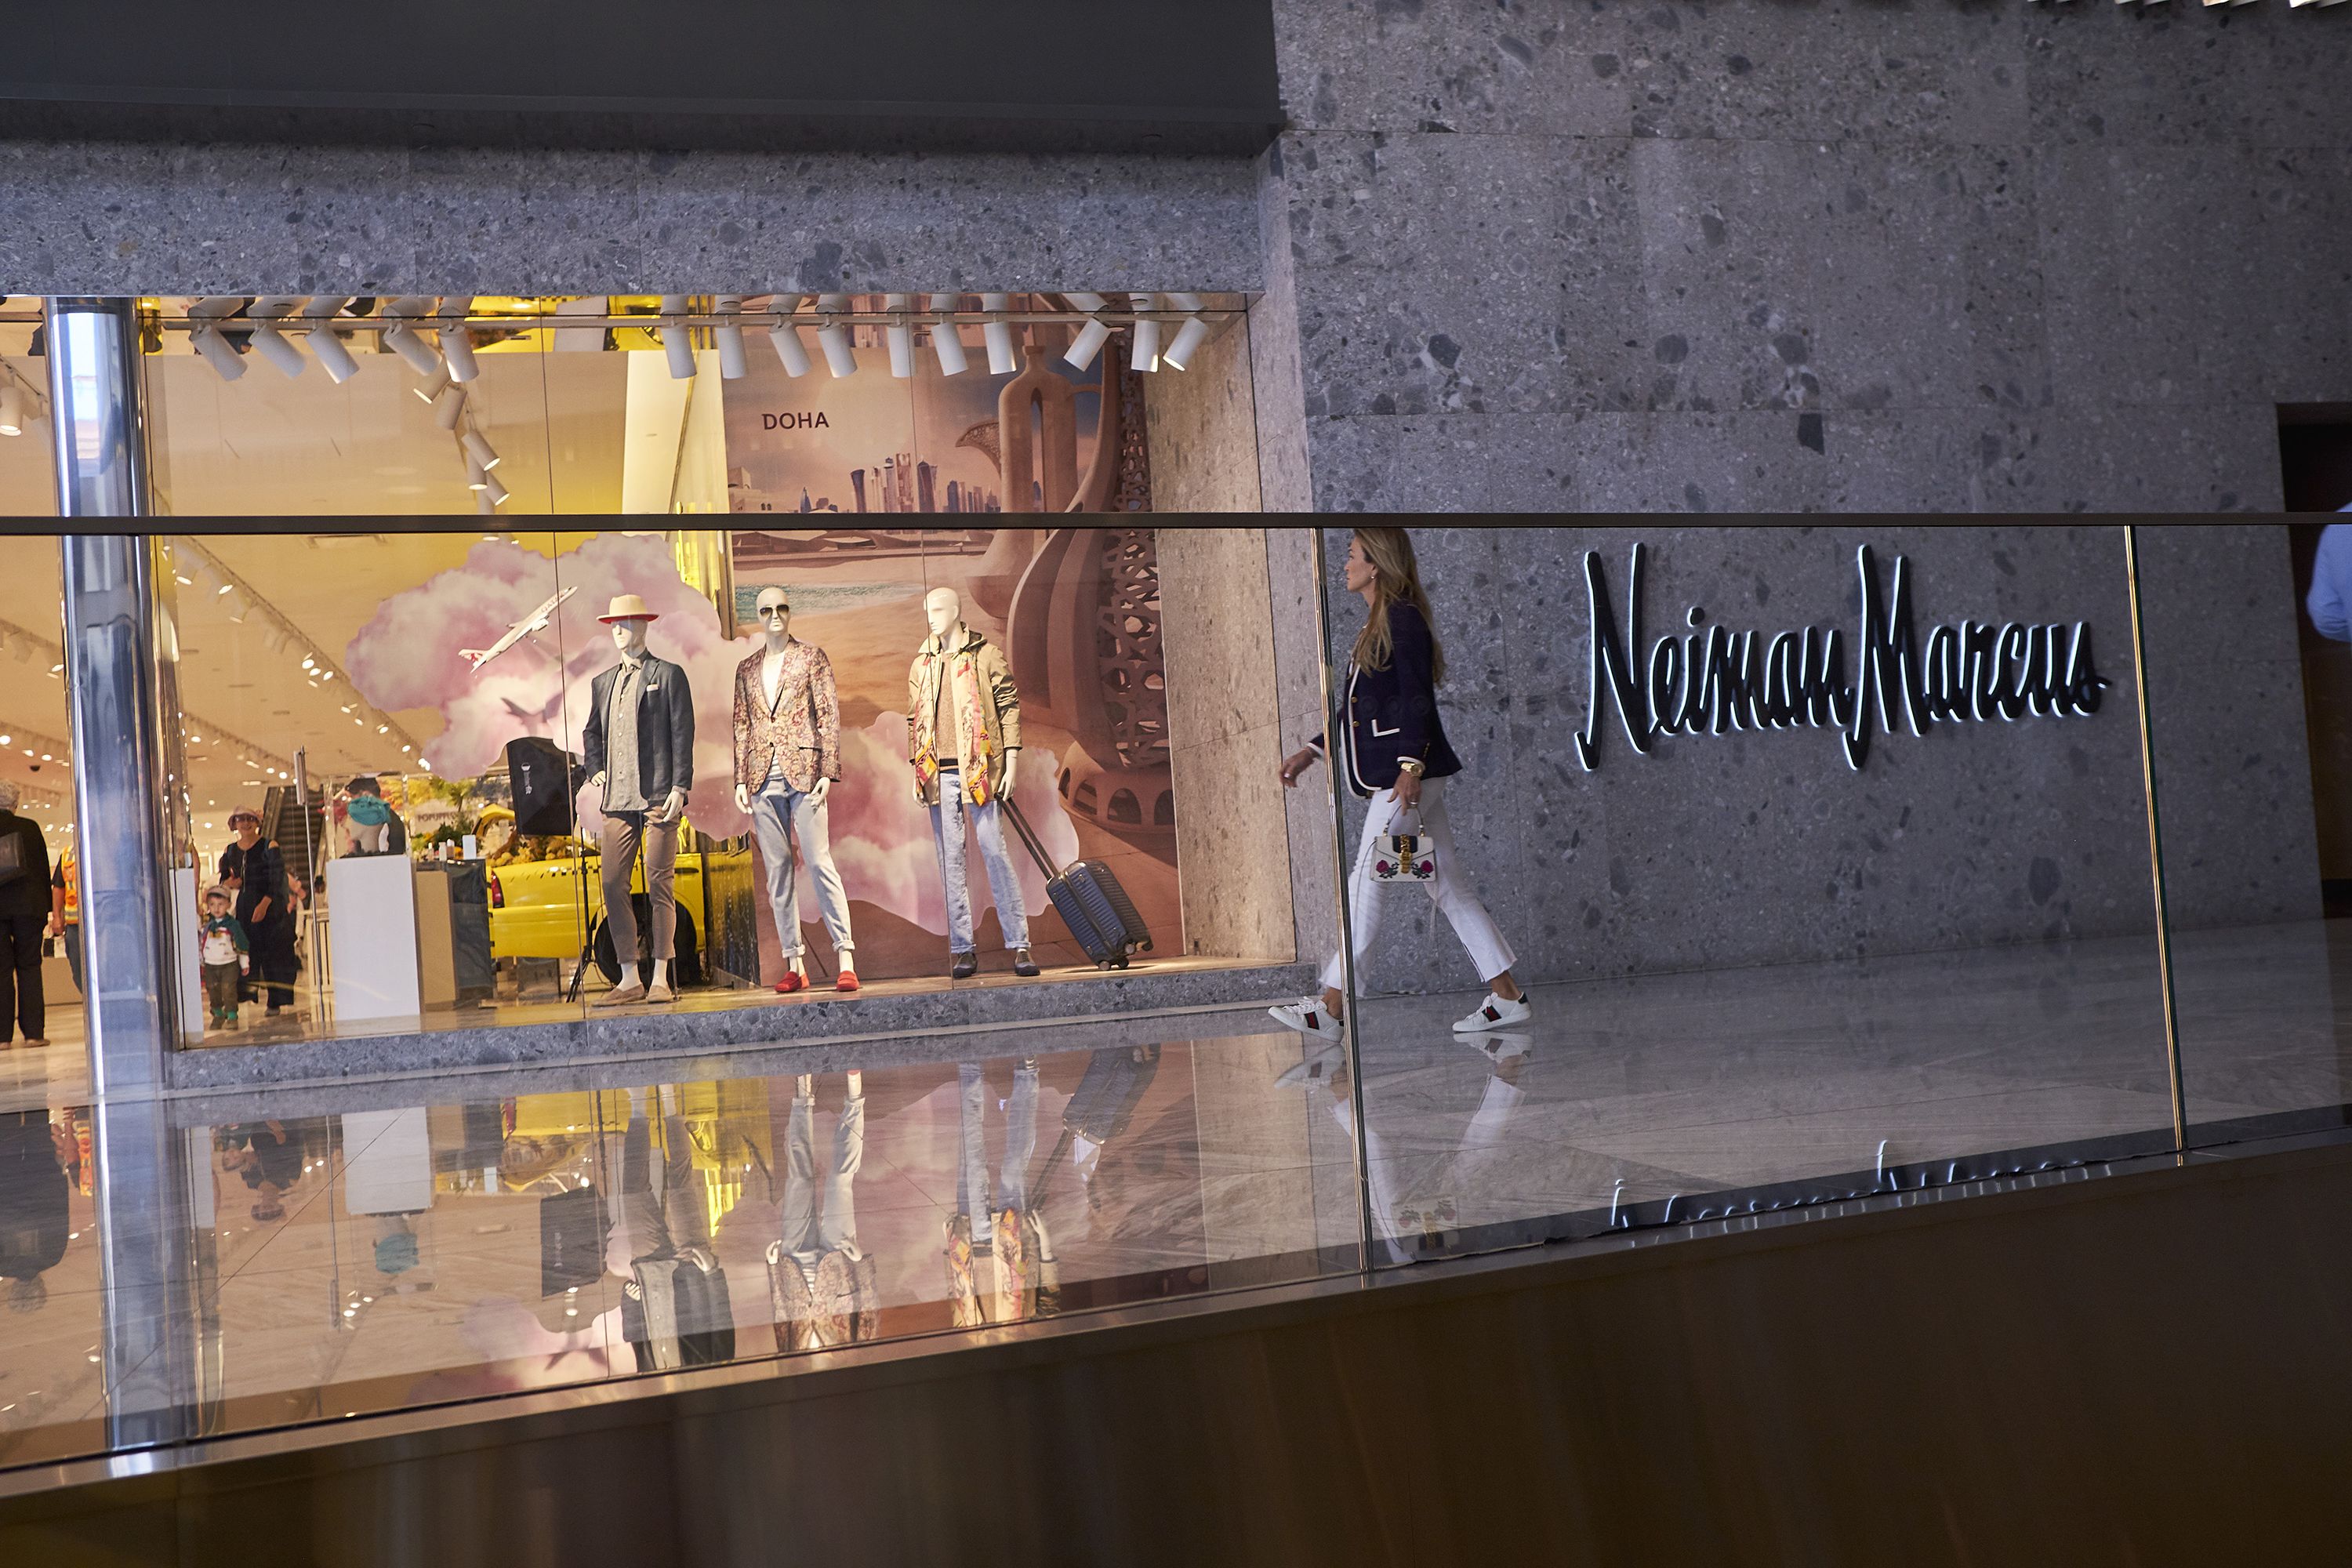 Neiman Marcus to Declare Bankruptcy – SMU Look